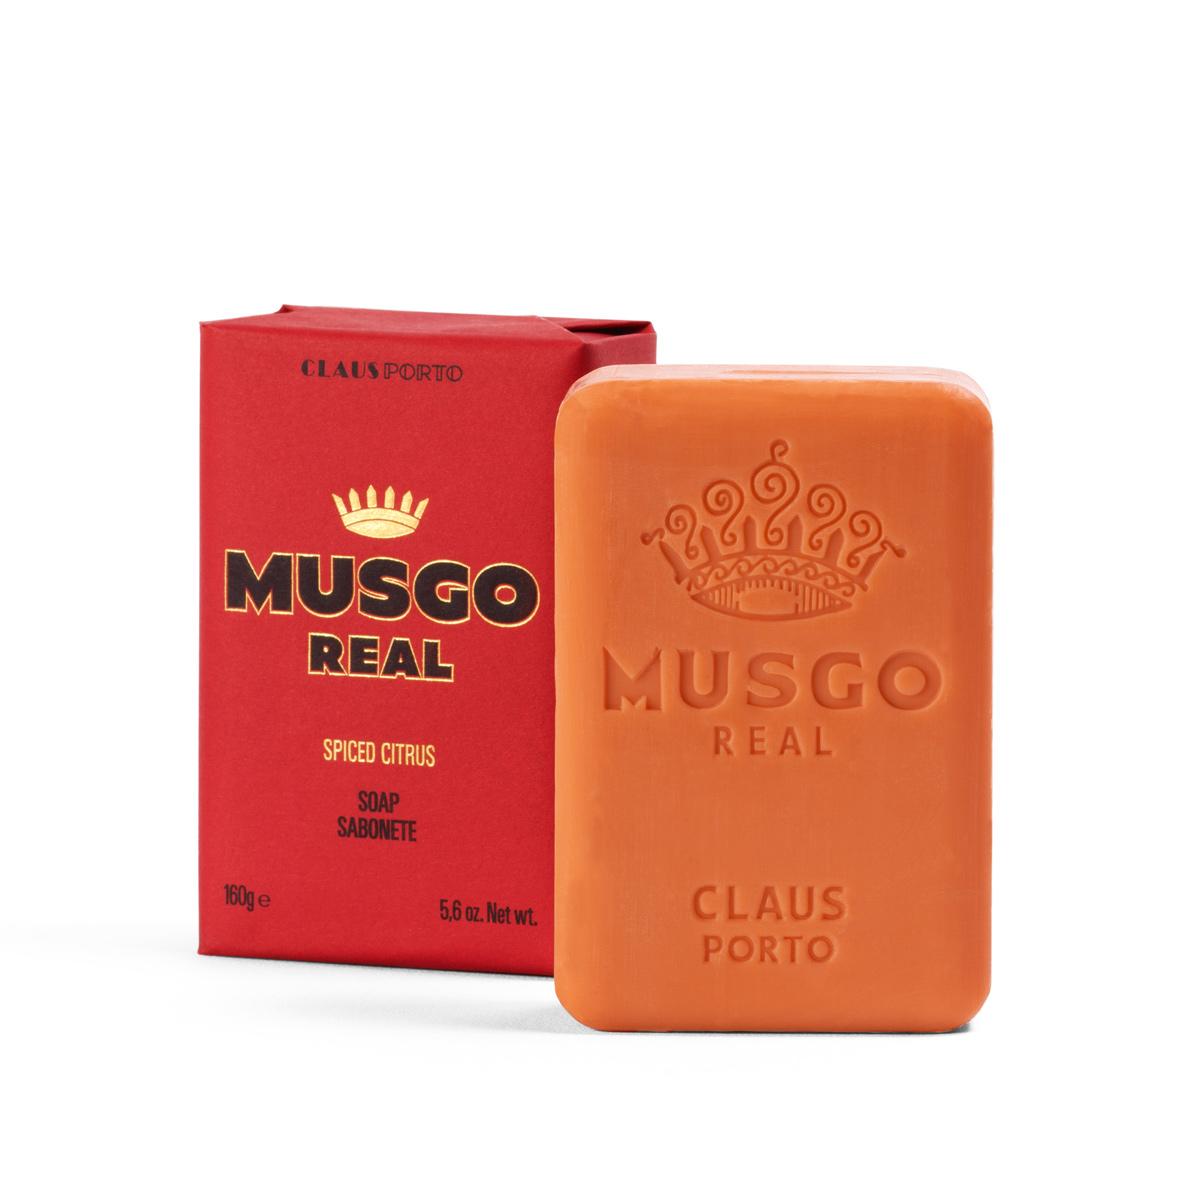 Musgo Real Men's Body Soap Spiced Citrus 160g